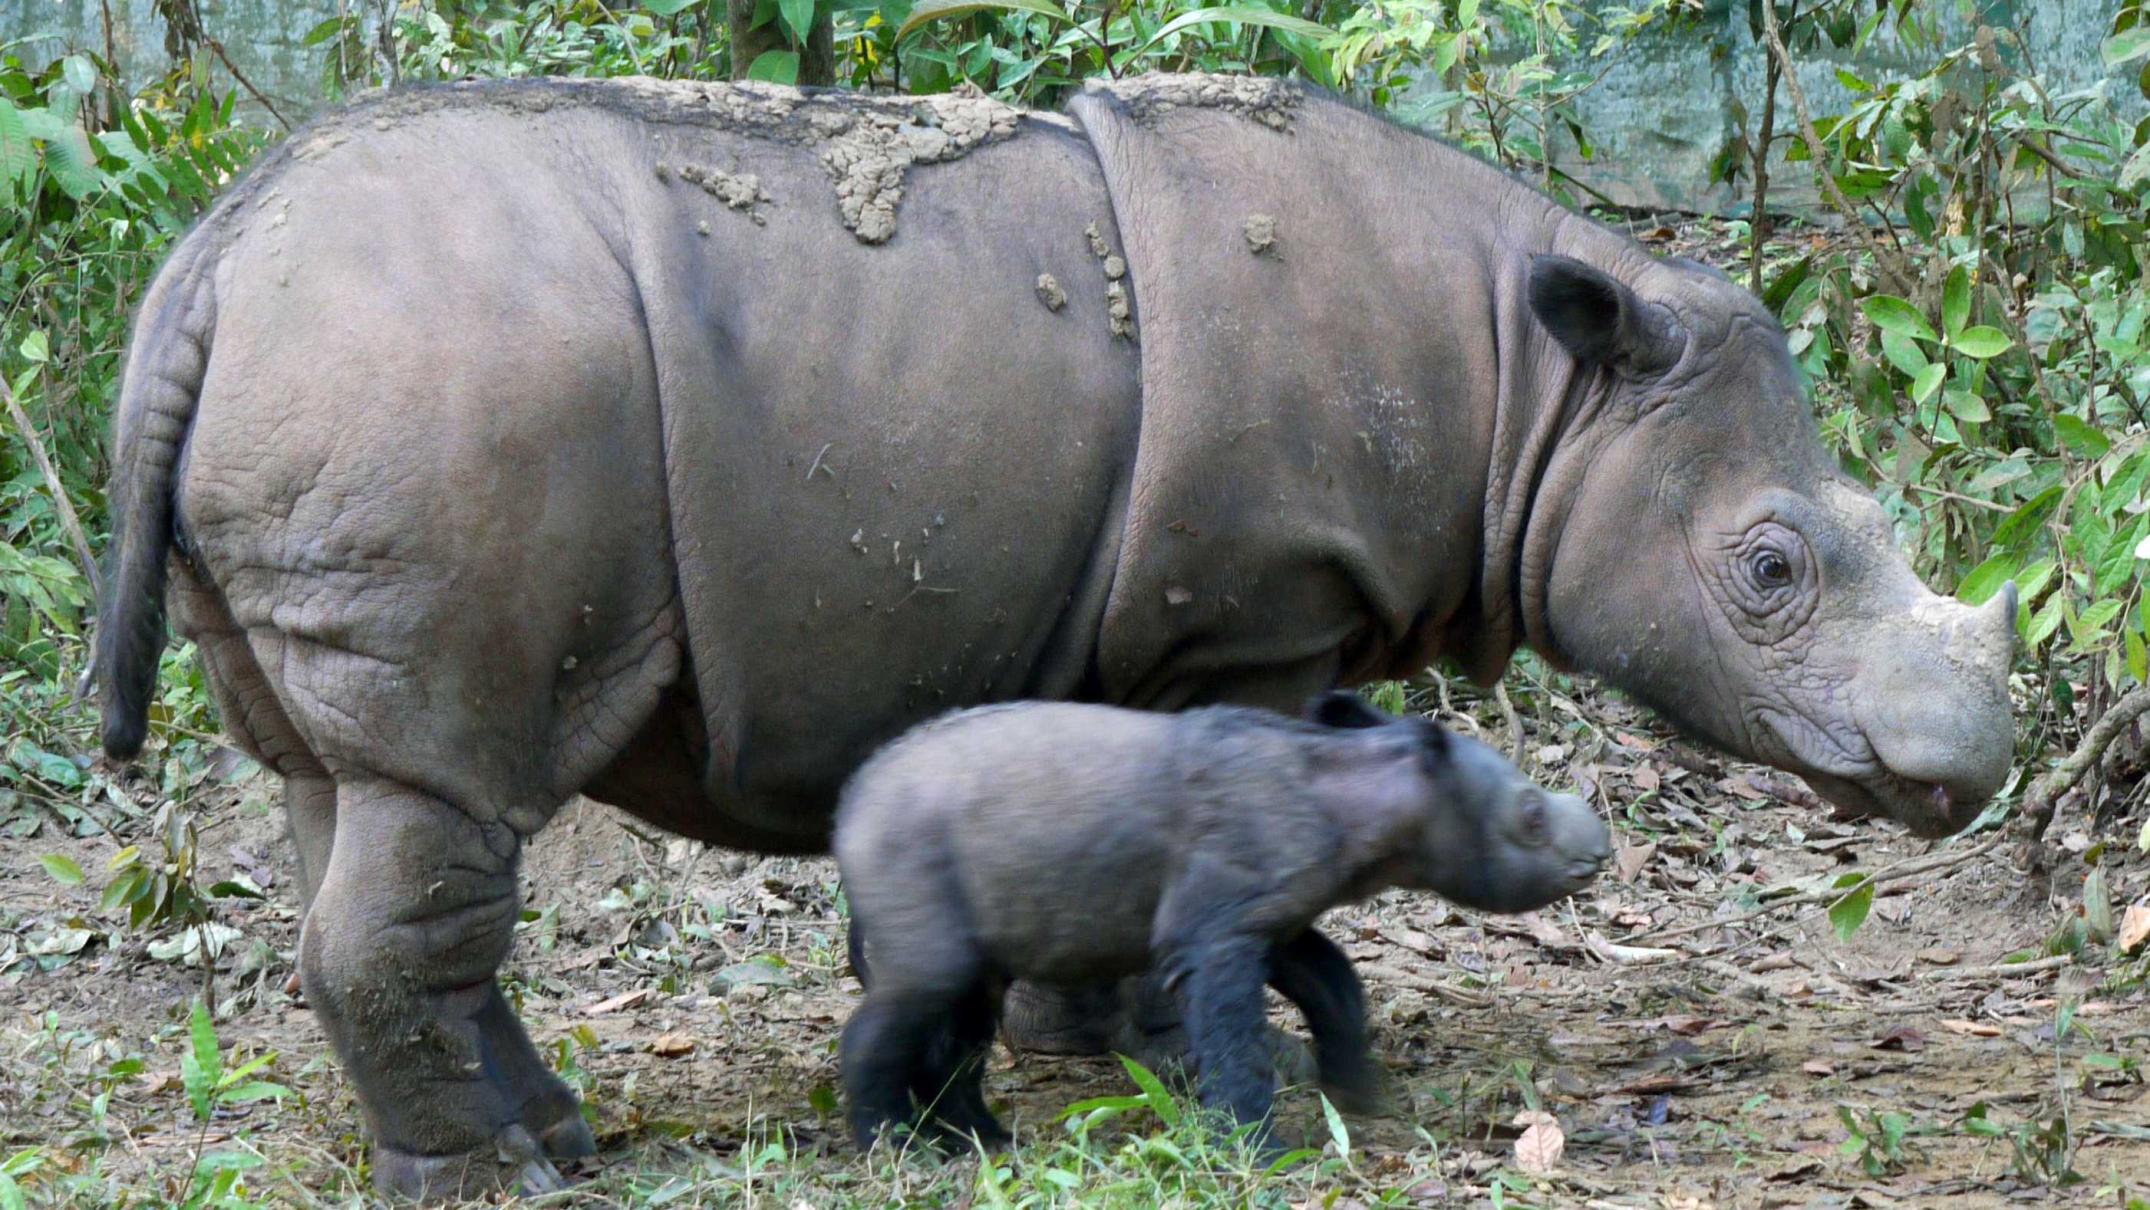 ... joyous' birth of endangered Sumatran rhino - World news - NewsLocker